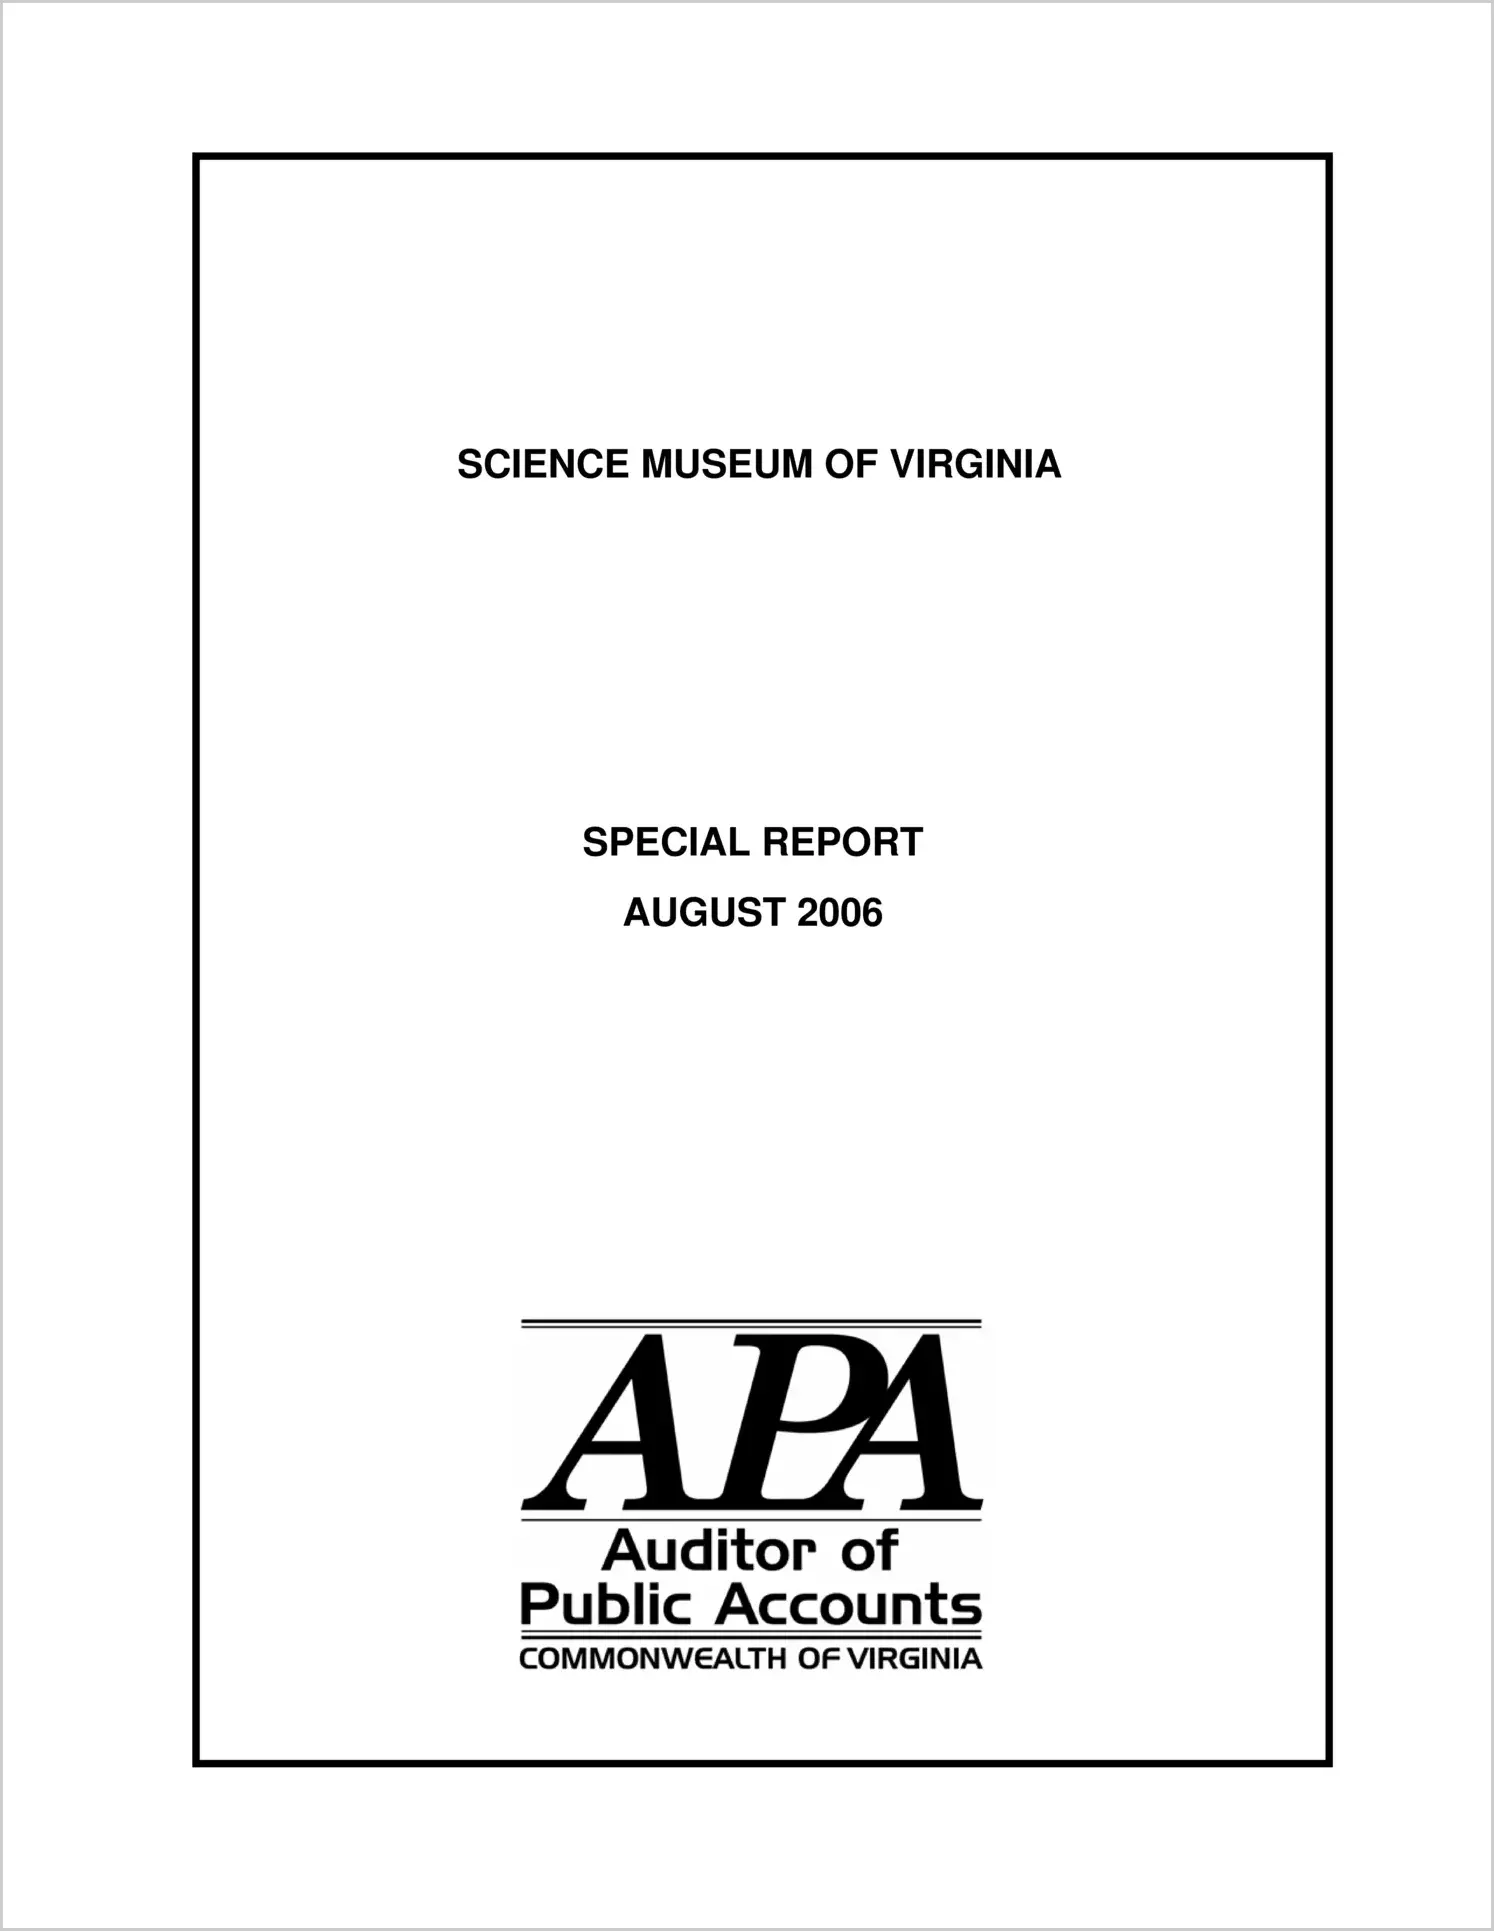 Science Museum of Virginia, Special Report, August 2006